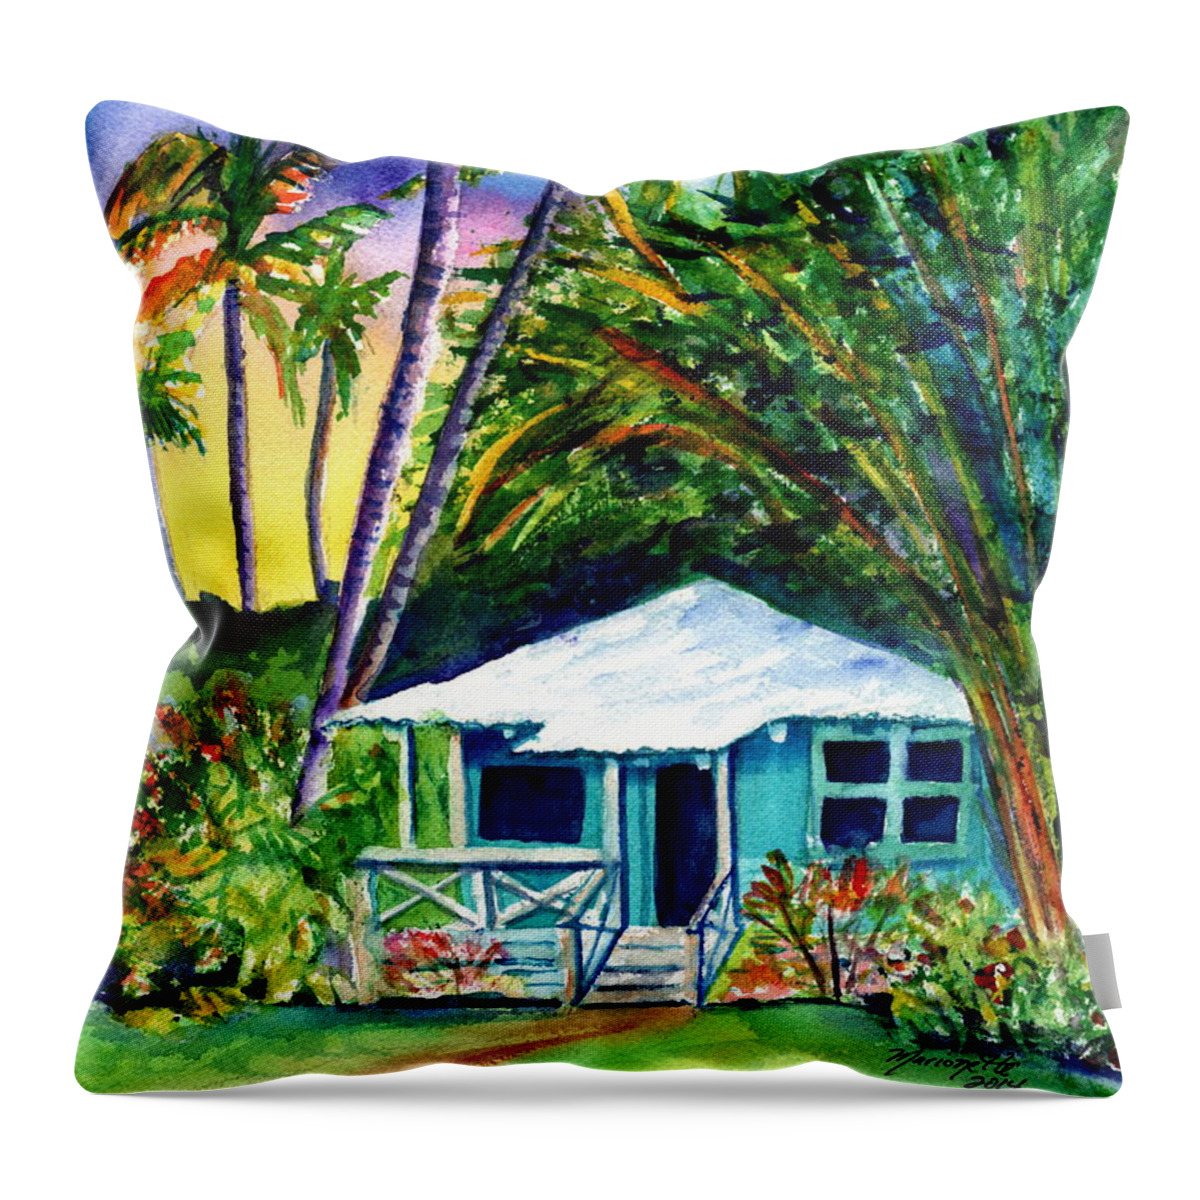 Kauai Throw Pillow featuring the painting Dreams of Kauai 2 by Marionette Taboniar